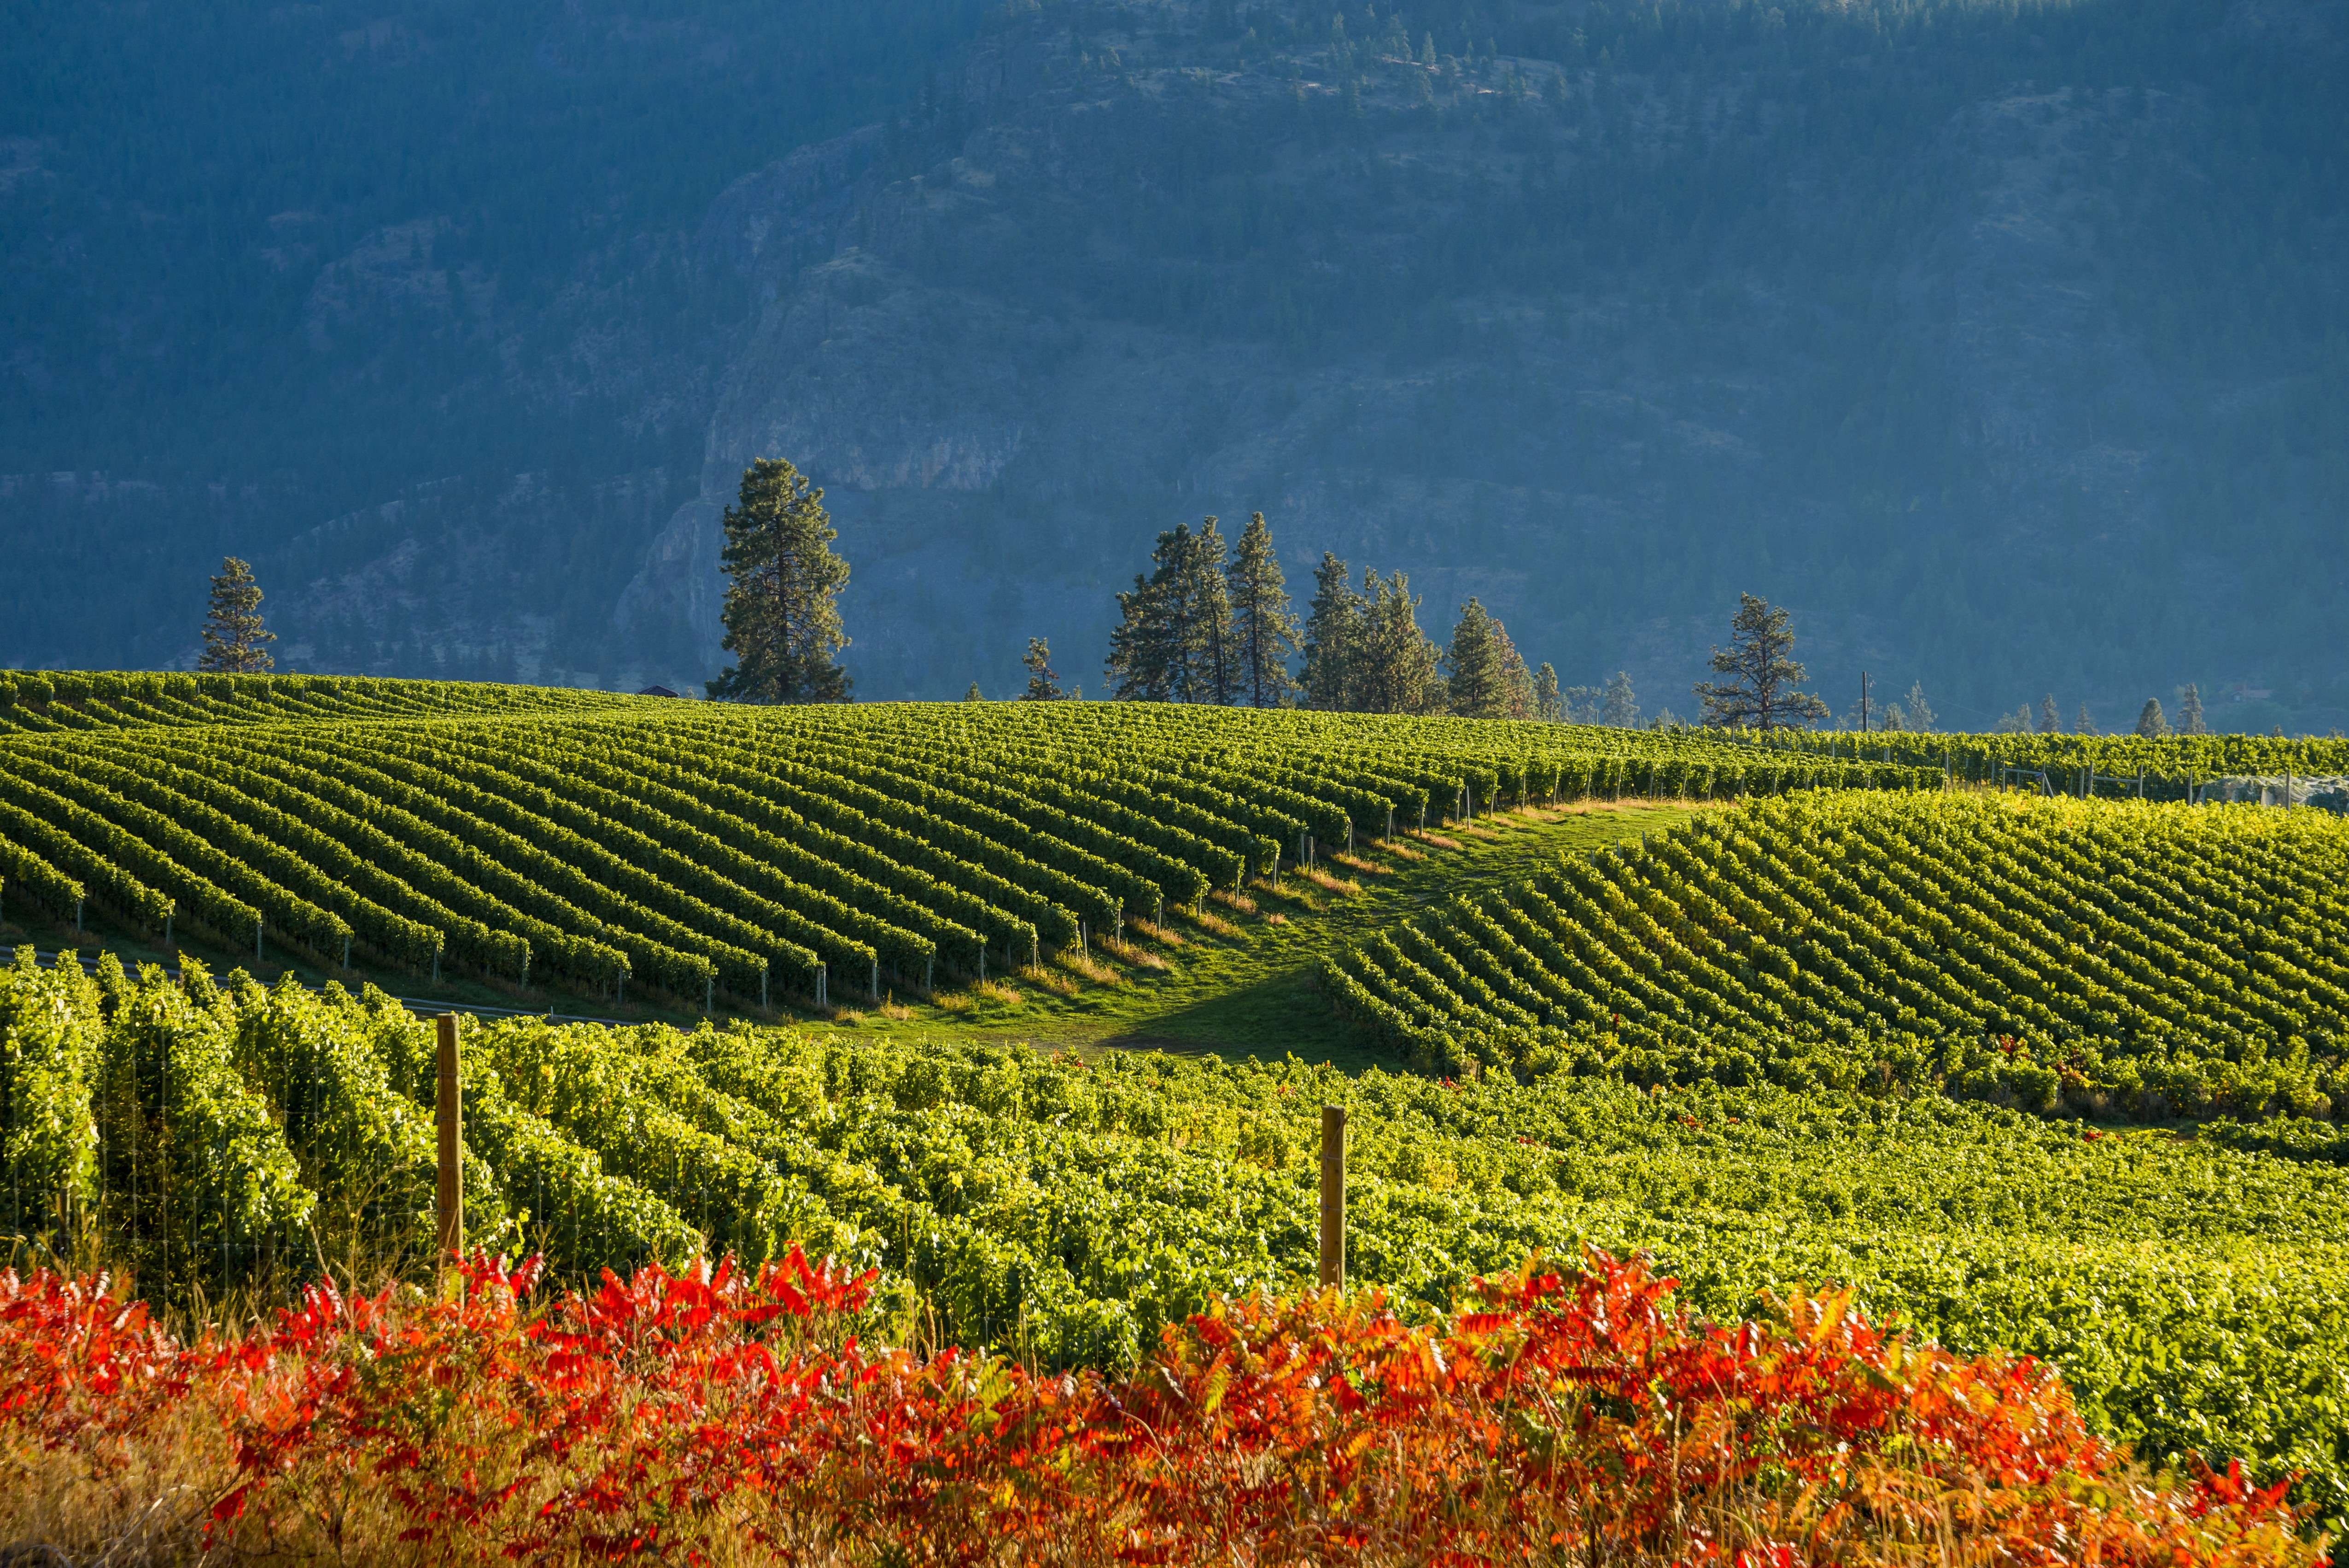 Vineyard in the Okanagan Valley in British Columbia. Photo: Corbis